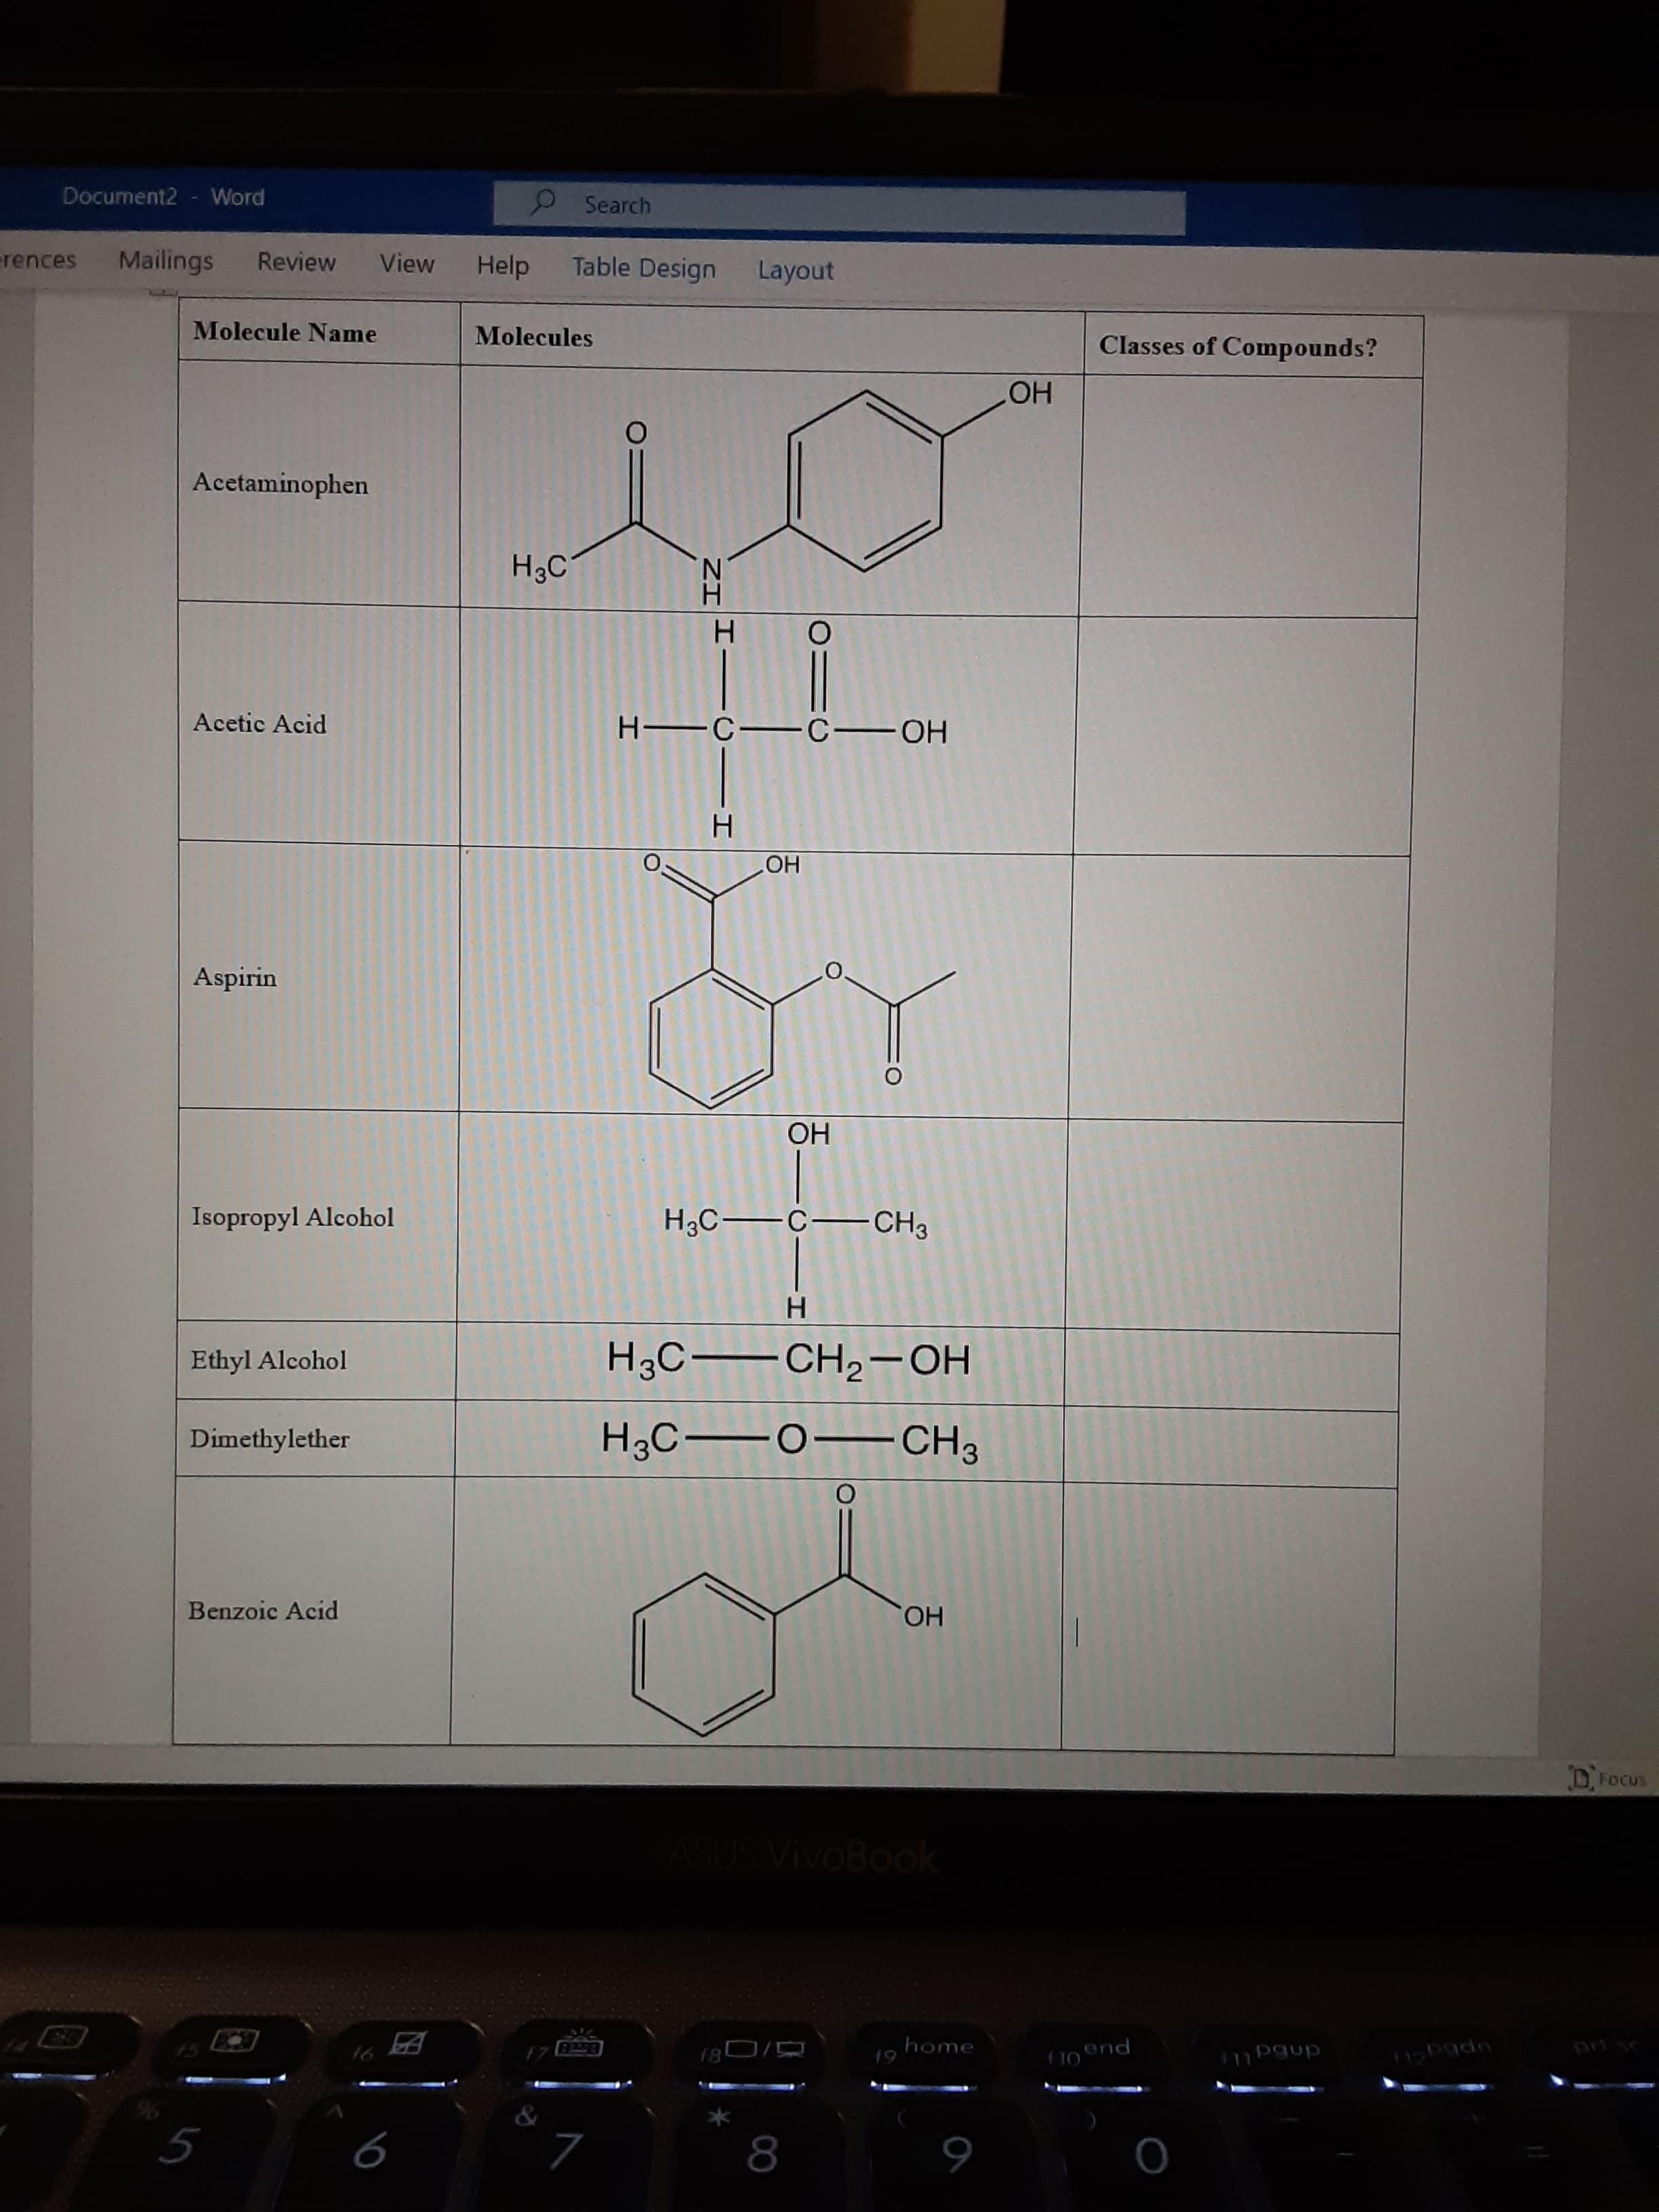 Help
Table Design
ces
Mailings
eview
View
Layout
Molecule Name
Molecules
Classes of Compounds?
Acetaminophen
H3C
N.
H.
Acetic Acid
H C-C OH
HO
Aspirin
OH
Isopropyl Alcohol
H3C-C-CH3
H
